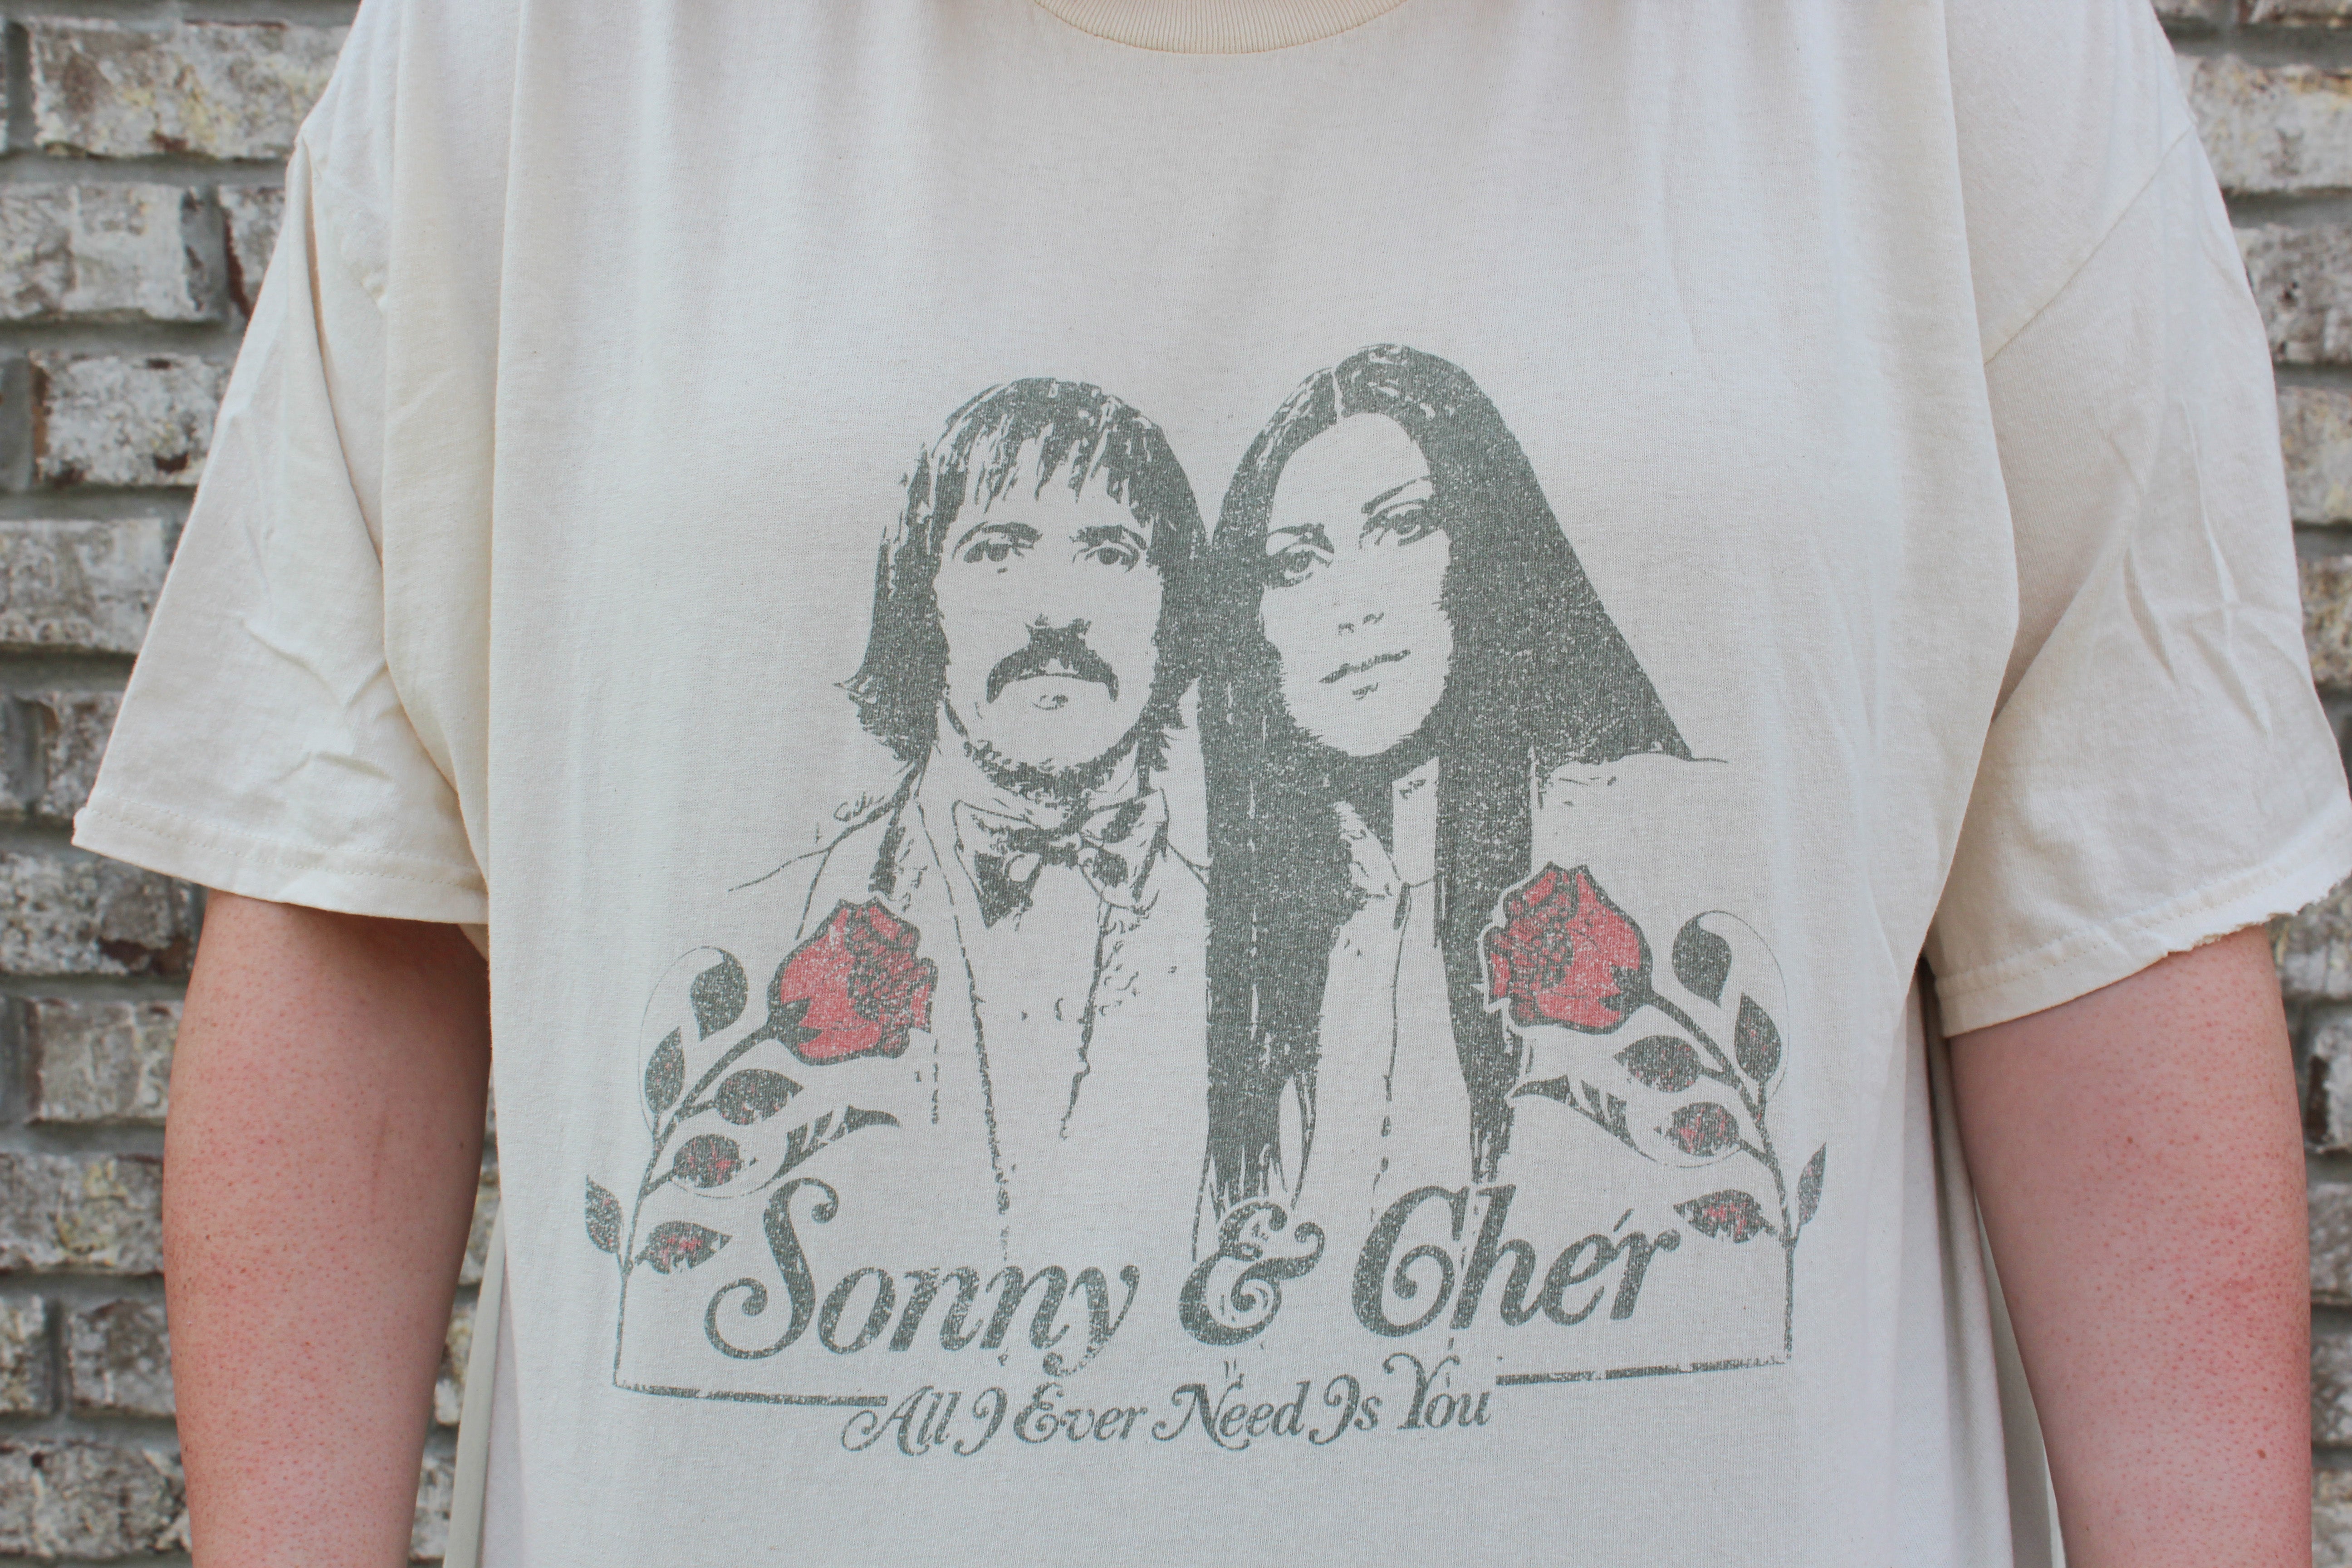 White Sonny & Cher Graphic T-Shirt-Final Sale